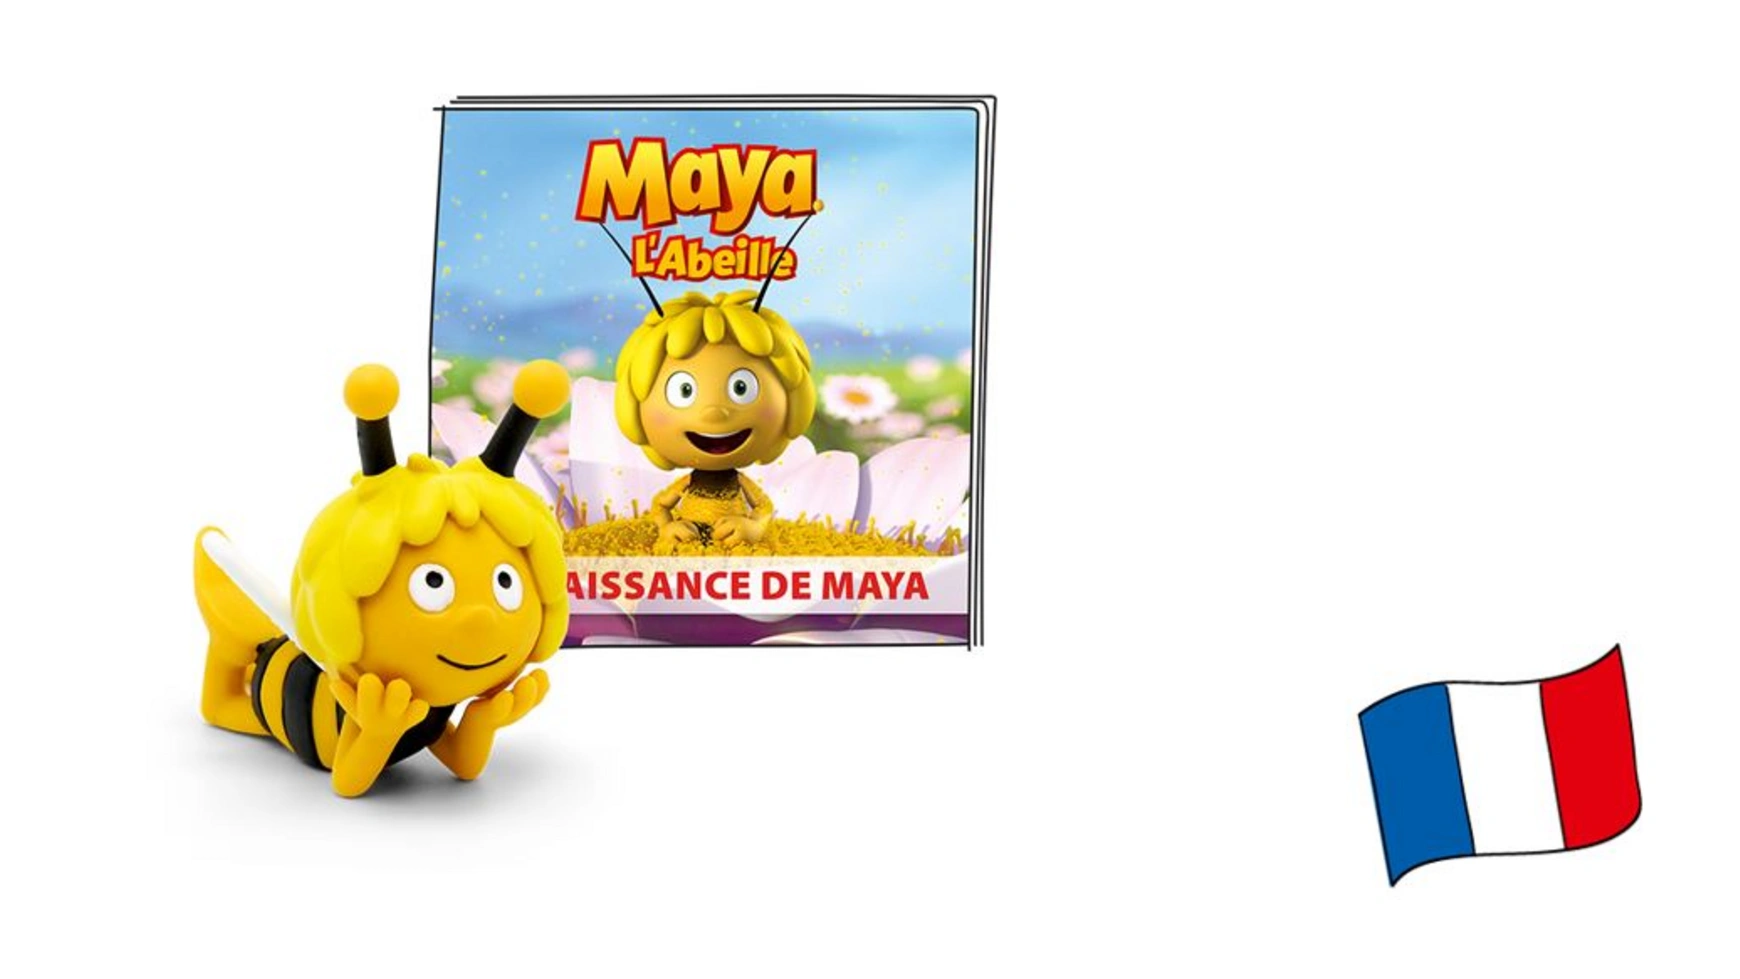 Фигура слушателя для toniebox: maya l'abeille: maya l'abeille (французский) Tonies